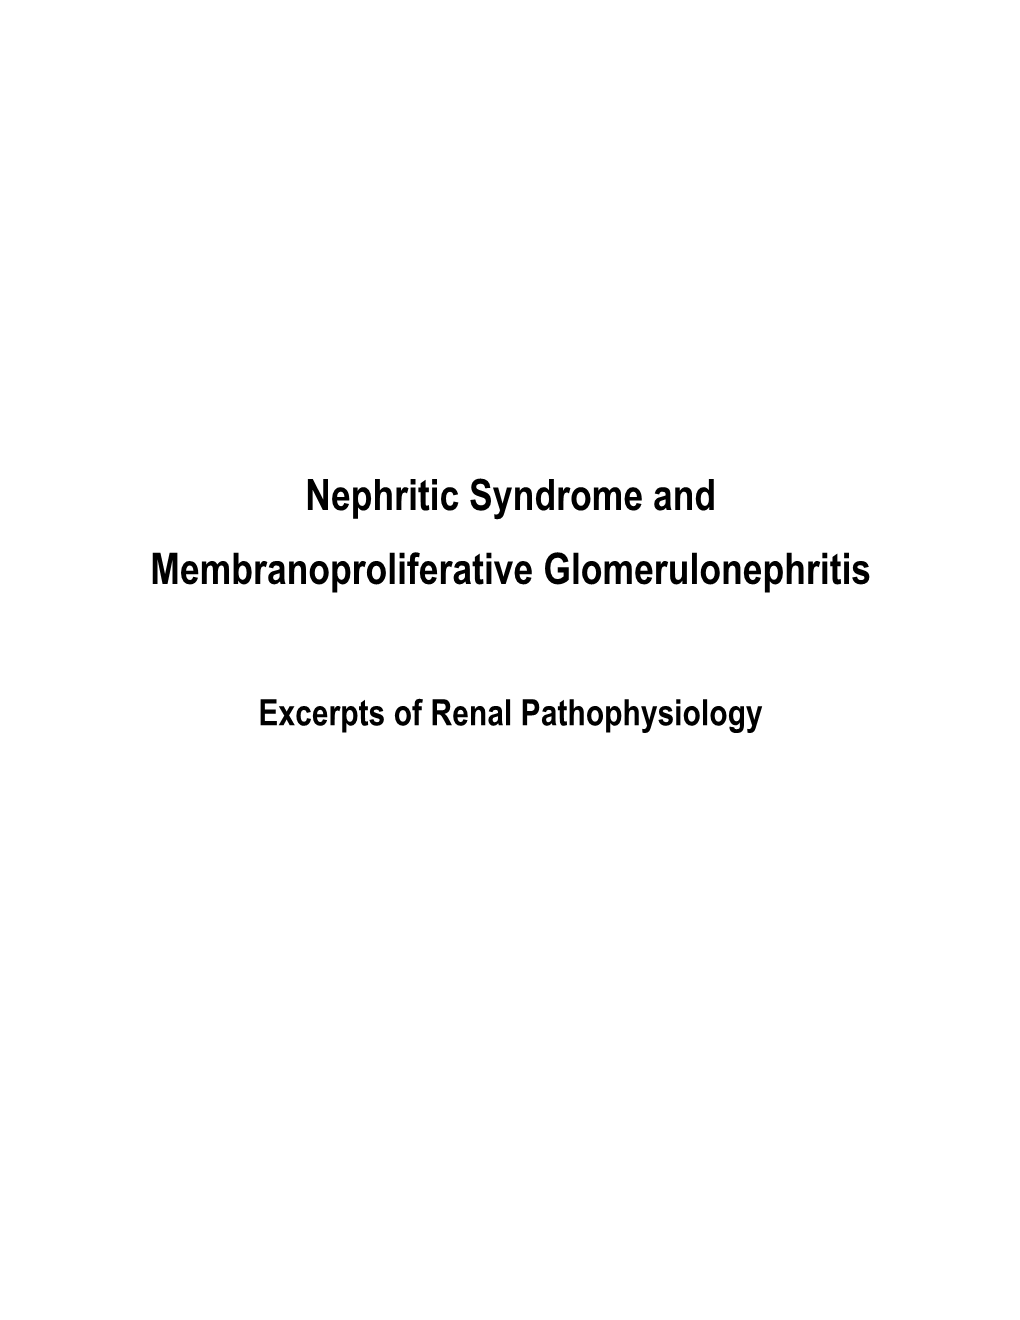 Nephritic Syndrome and Membranoproliferative Glomerulonephritis